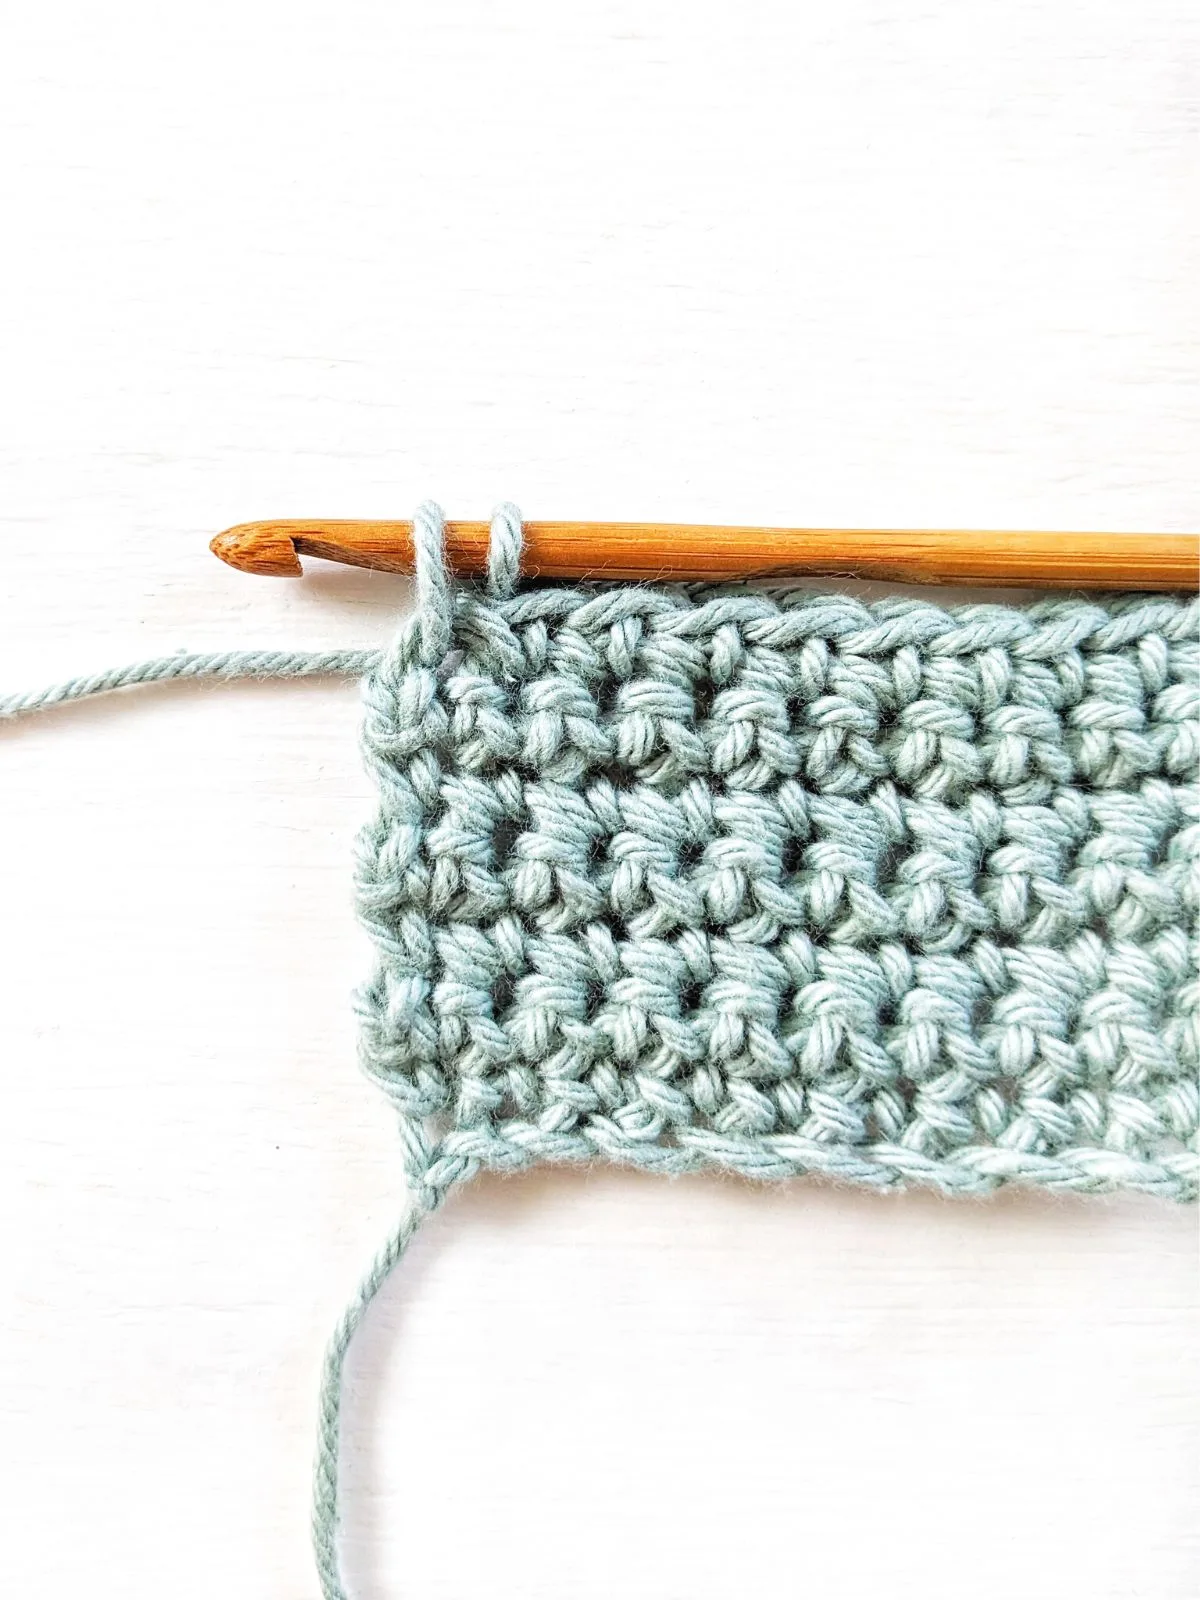 How to change yarn colors using single crochet.